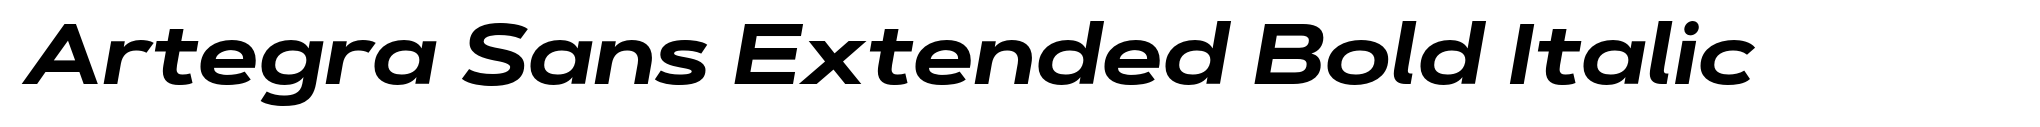 Artegra Sans Extended Bold Italic image